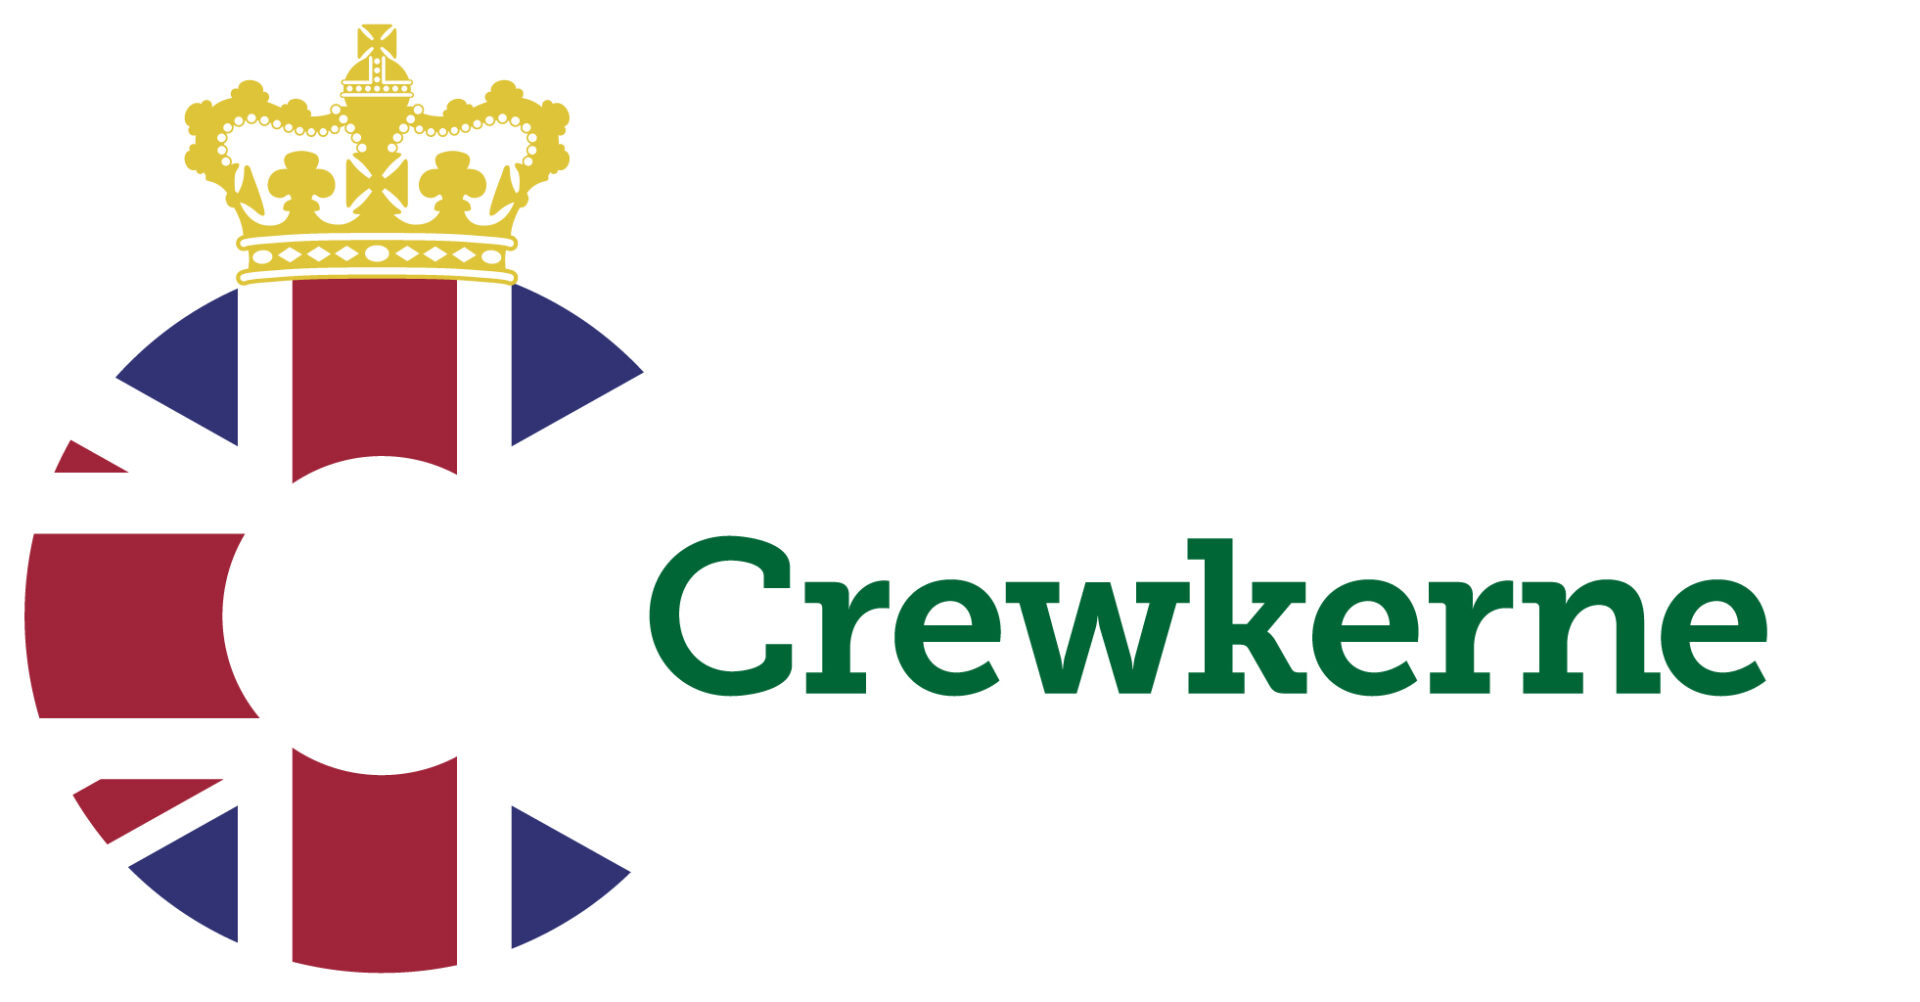 Crewkerne Town Council Home